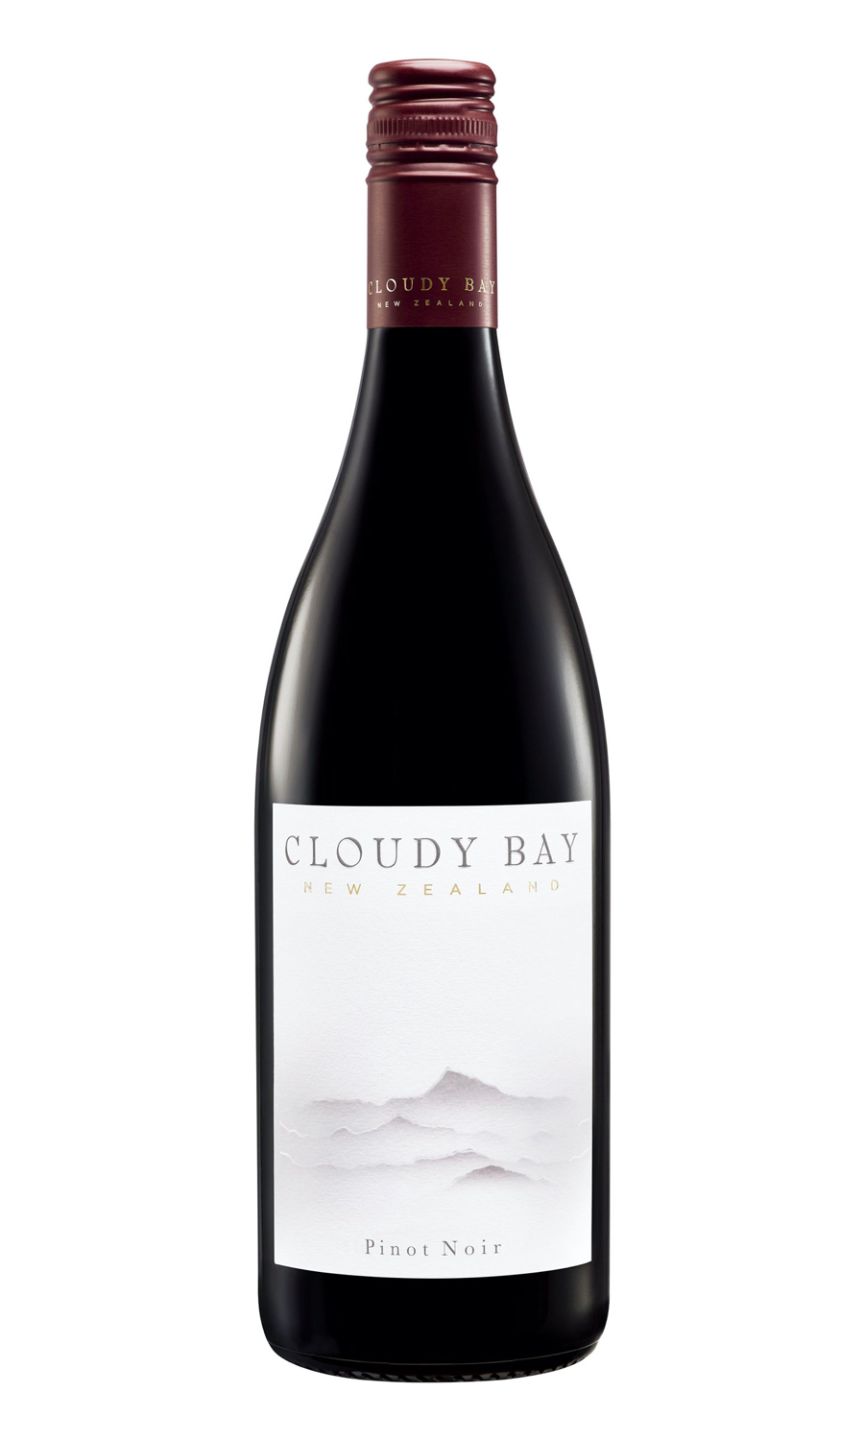 Cloudy Bay Pinot Noir Marlborough 2020